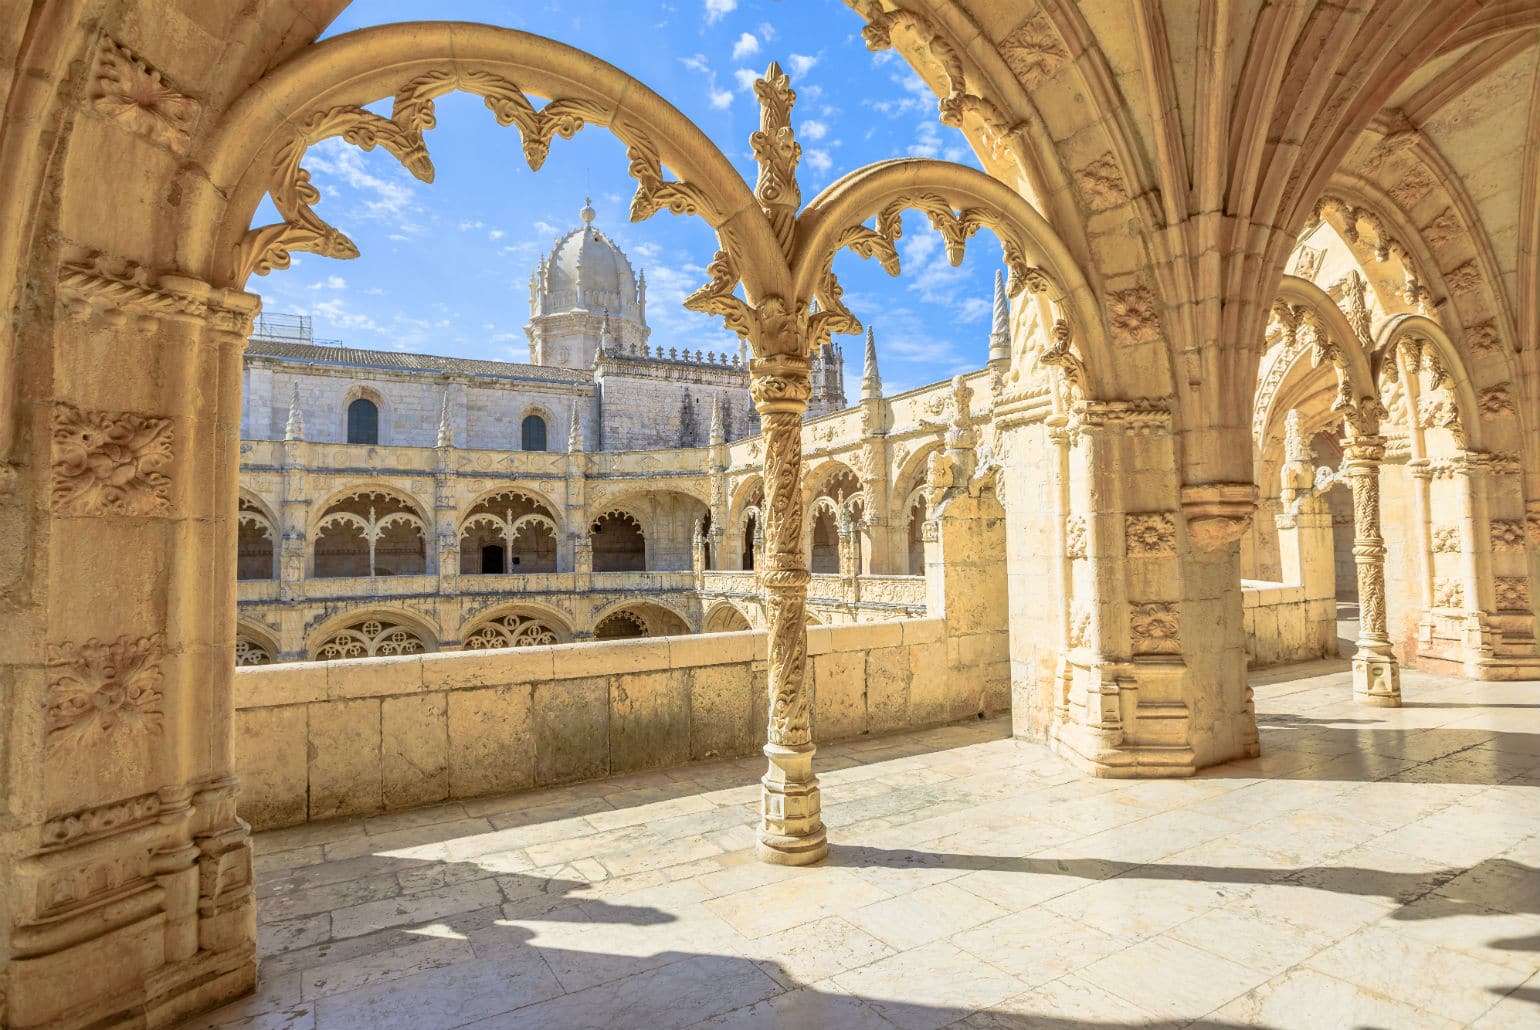 16e-eeuws Mosteiro dos Jerónimos (Hiëronymietenklooster) - Lissabon